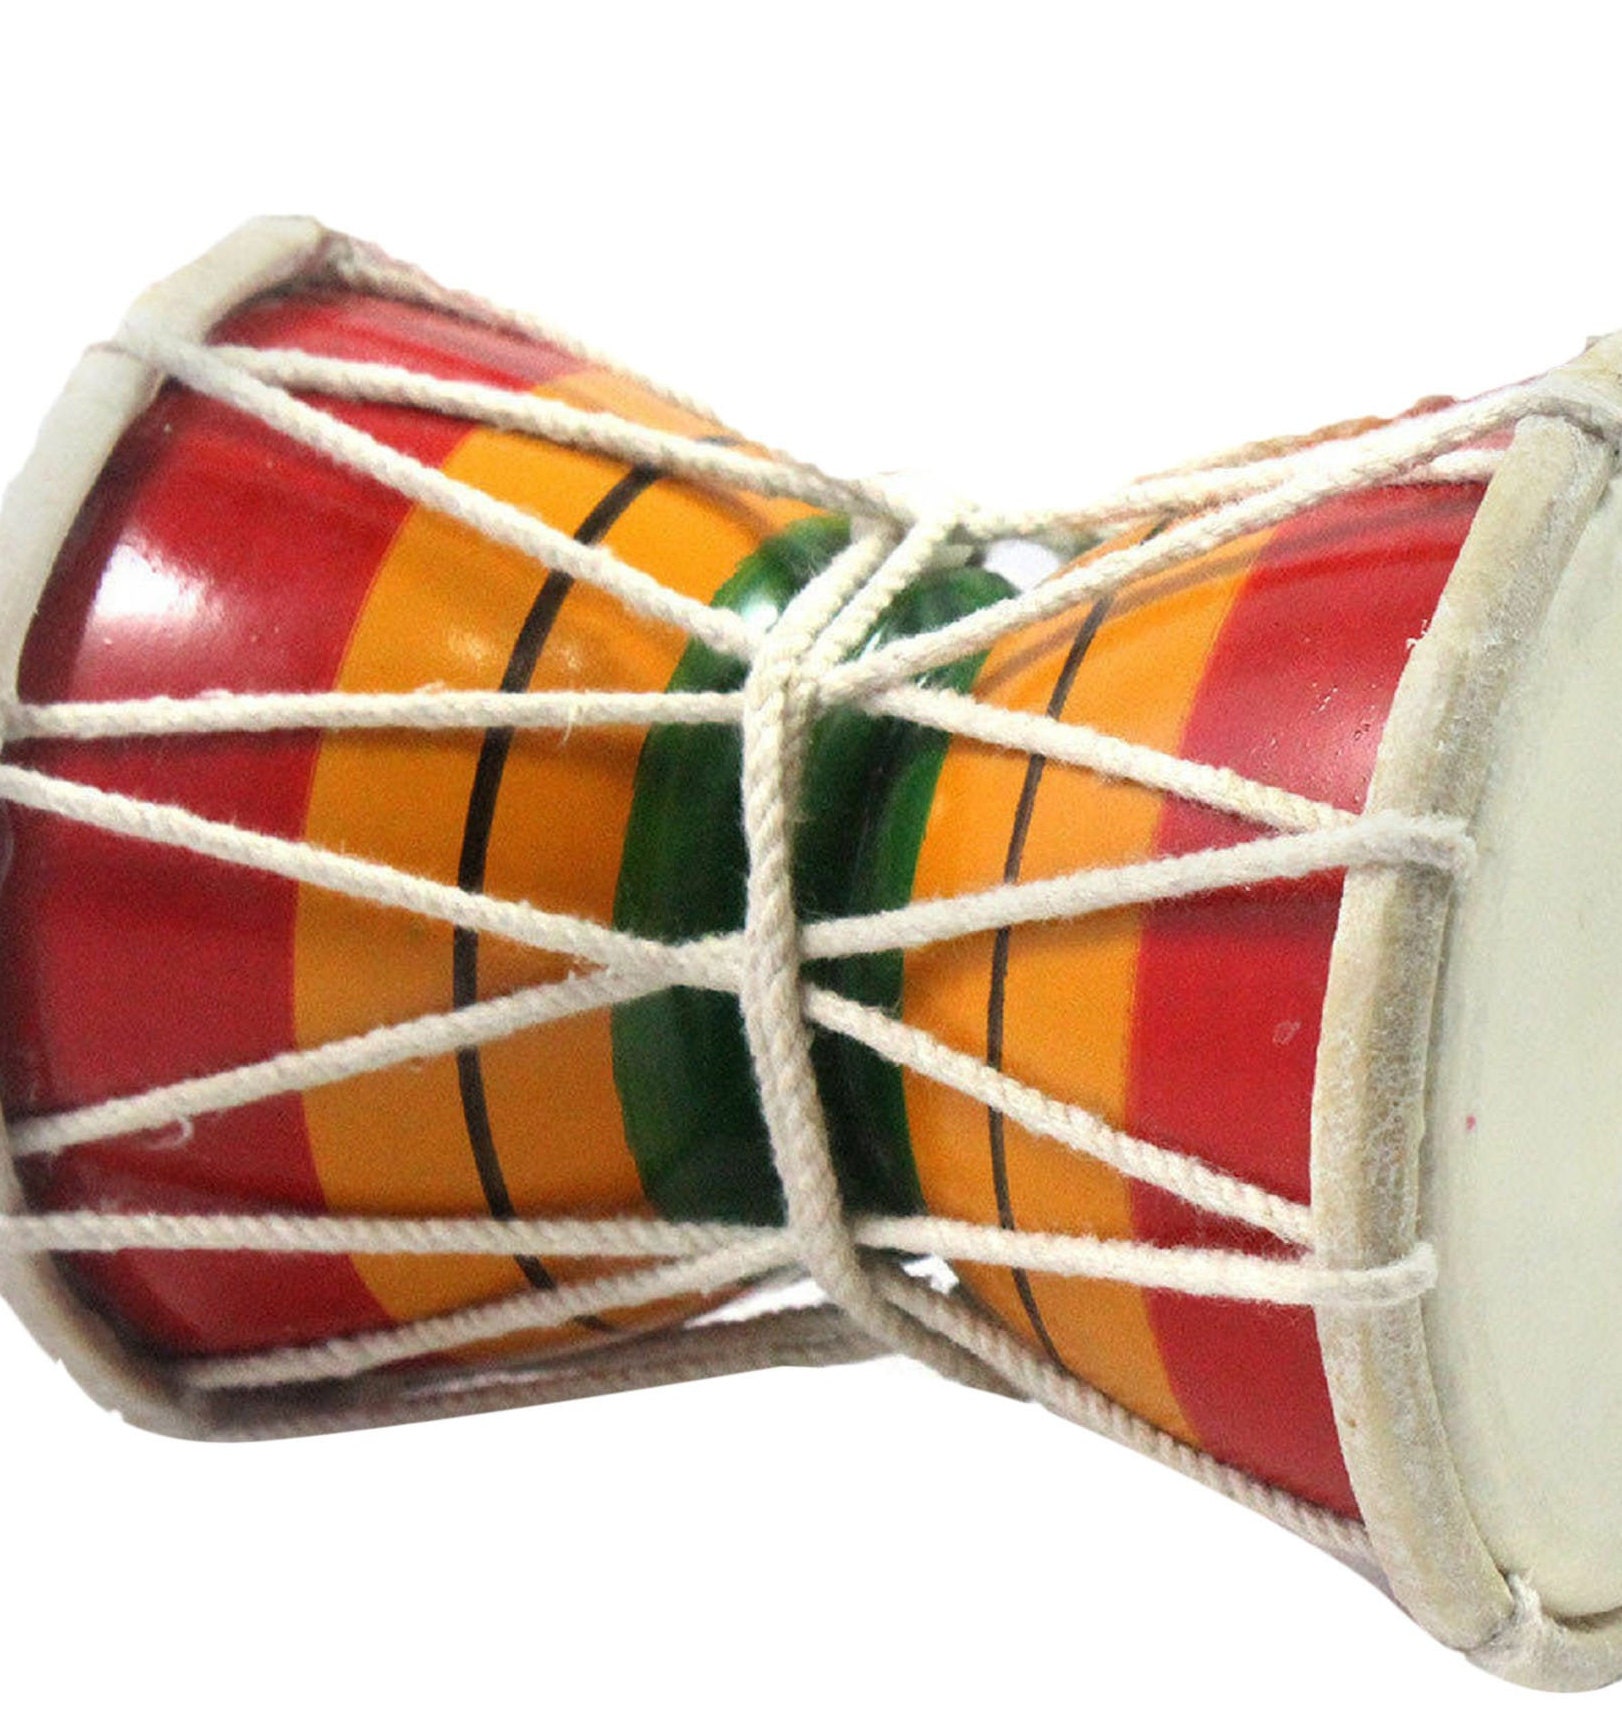 Tables de Indias - percussion instrument hindou - 2 pieces - ORIGINAL